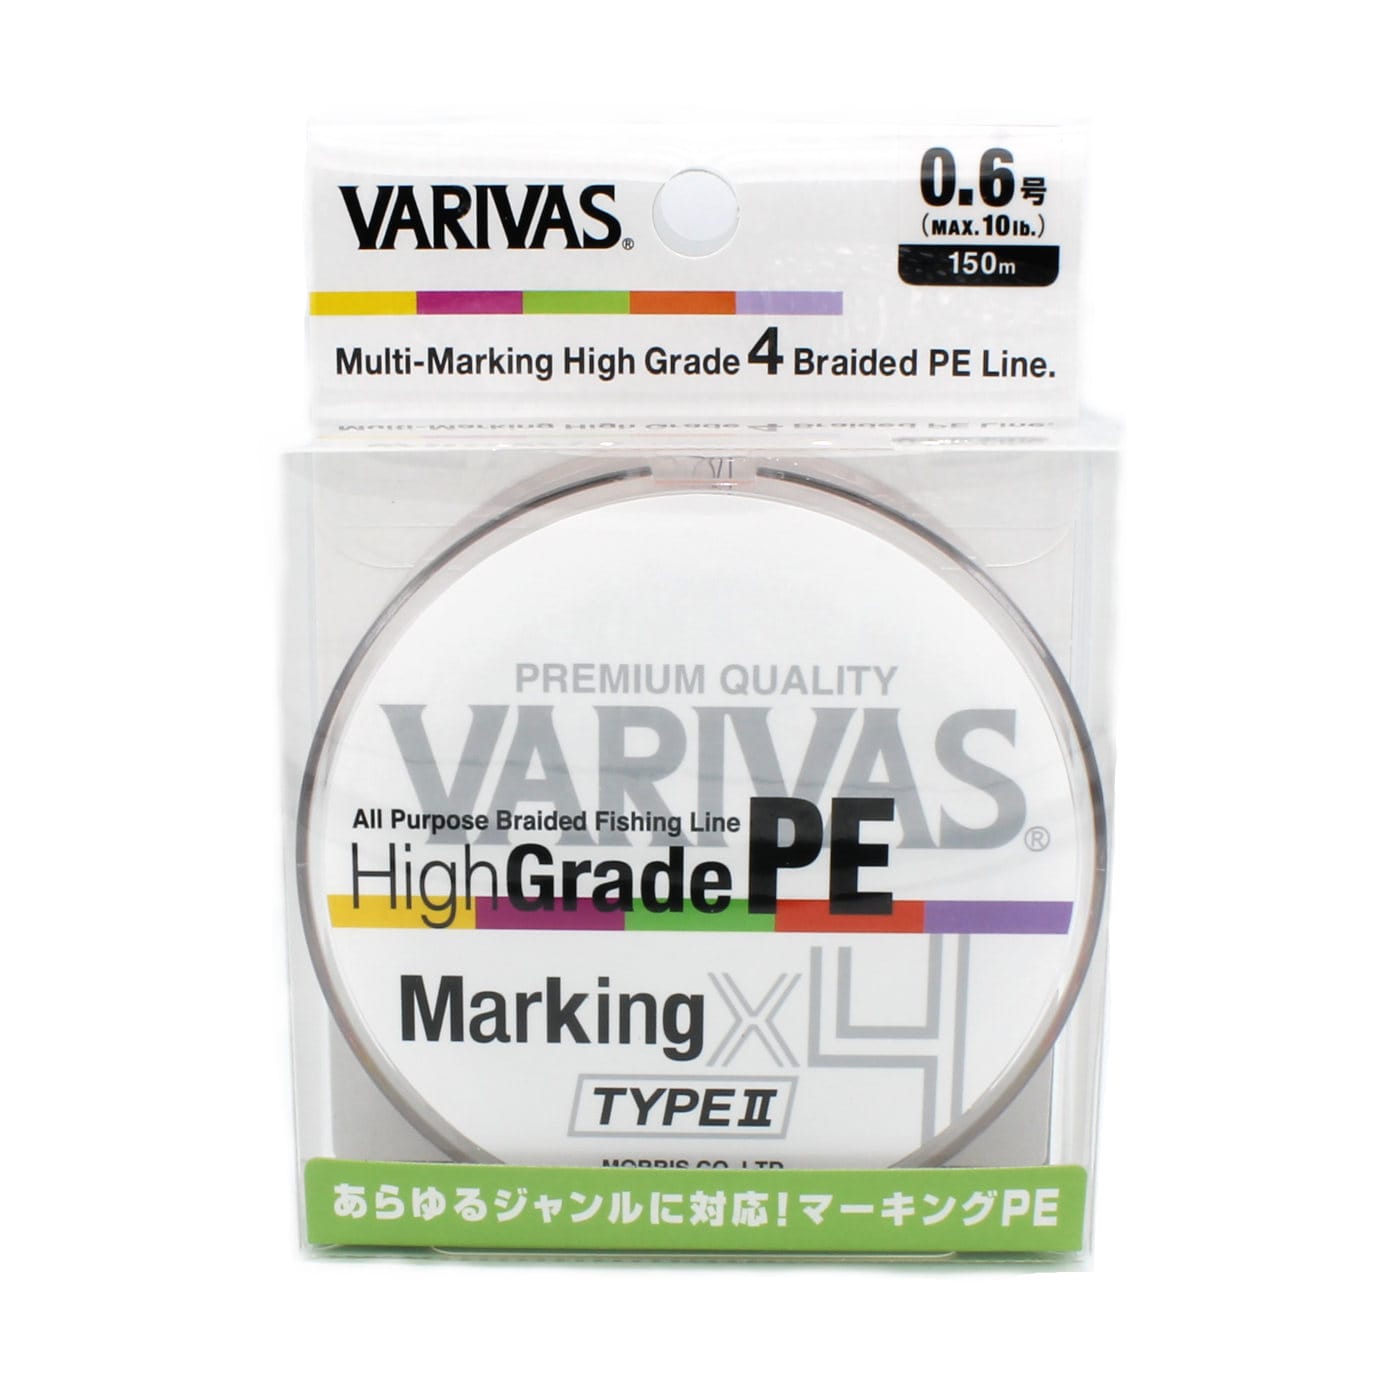 Varivas High Grade PE Marking Type II X4 Braided Line - Bait Finesse Empire